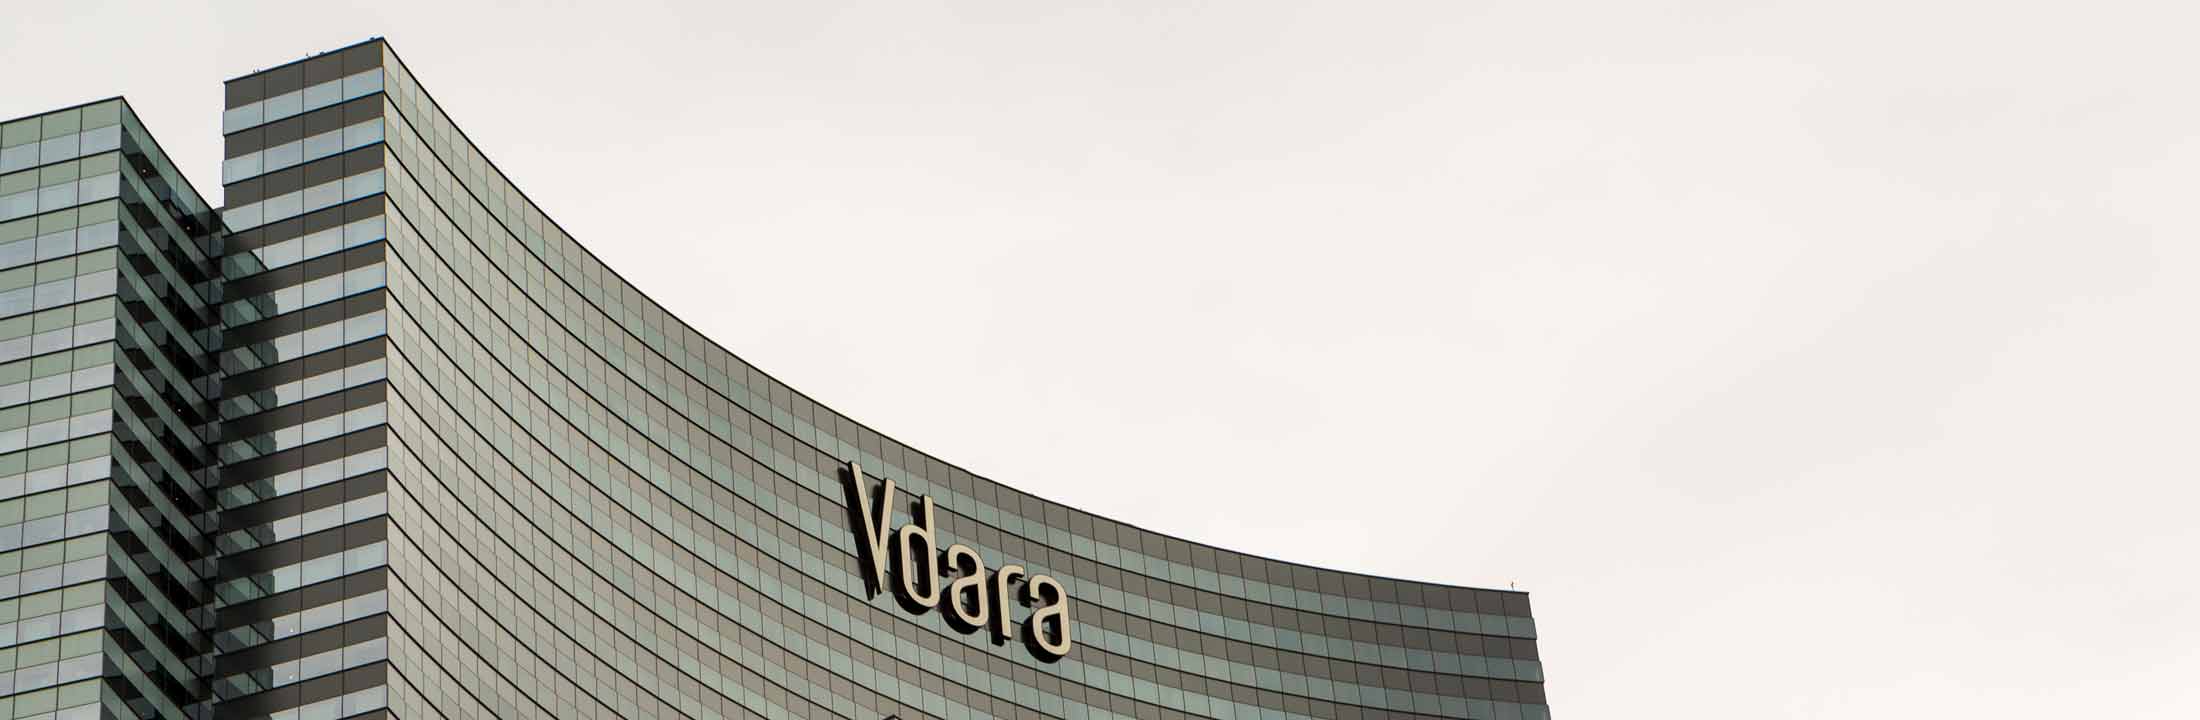 Vdara Logo - Vdara Condos in Las Vegas